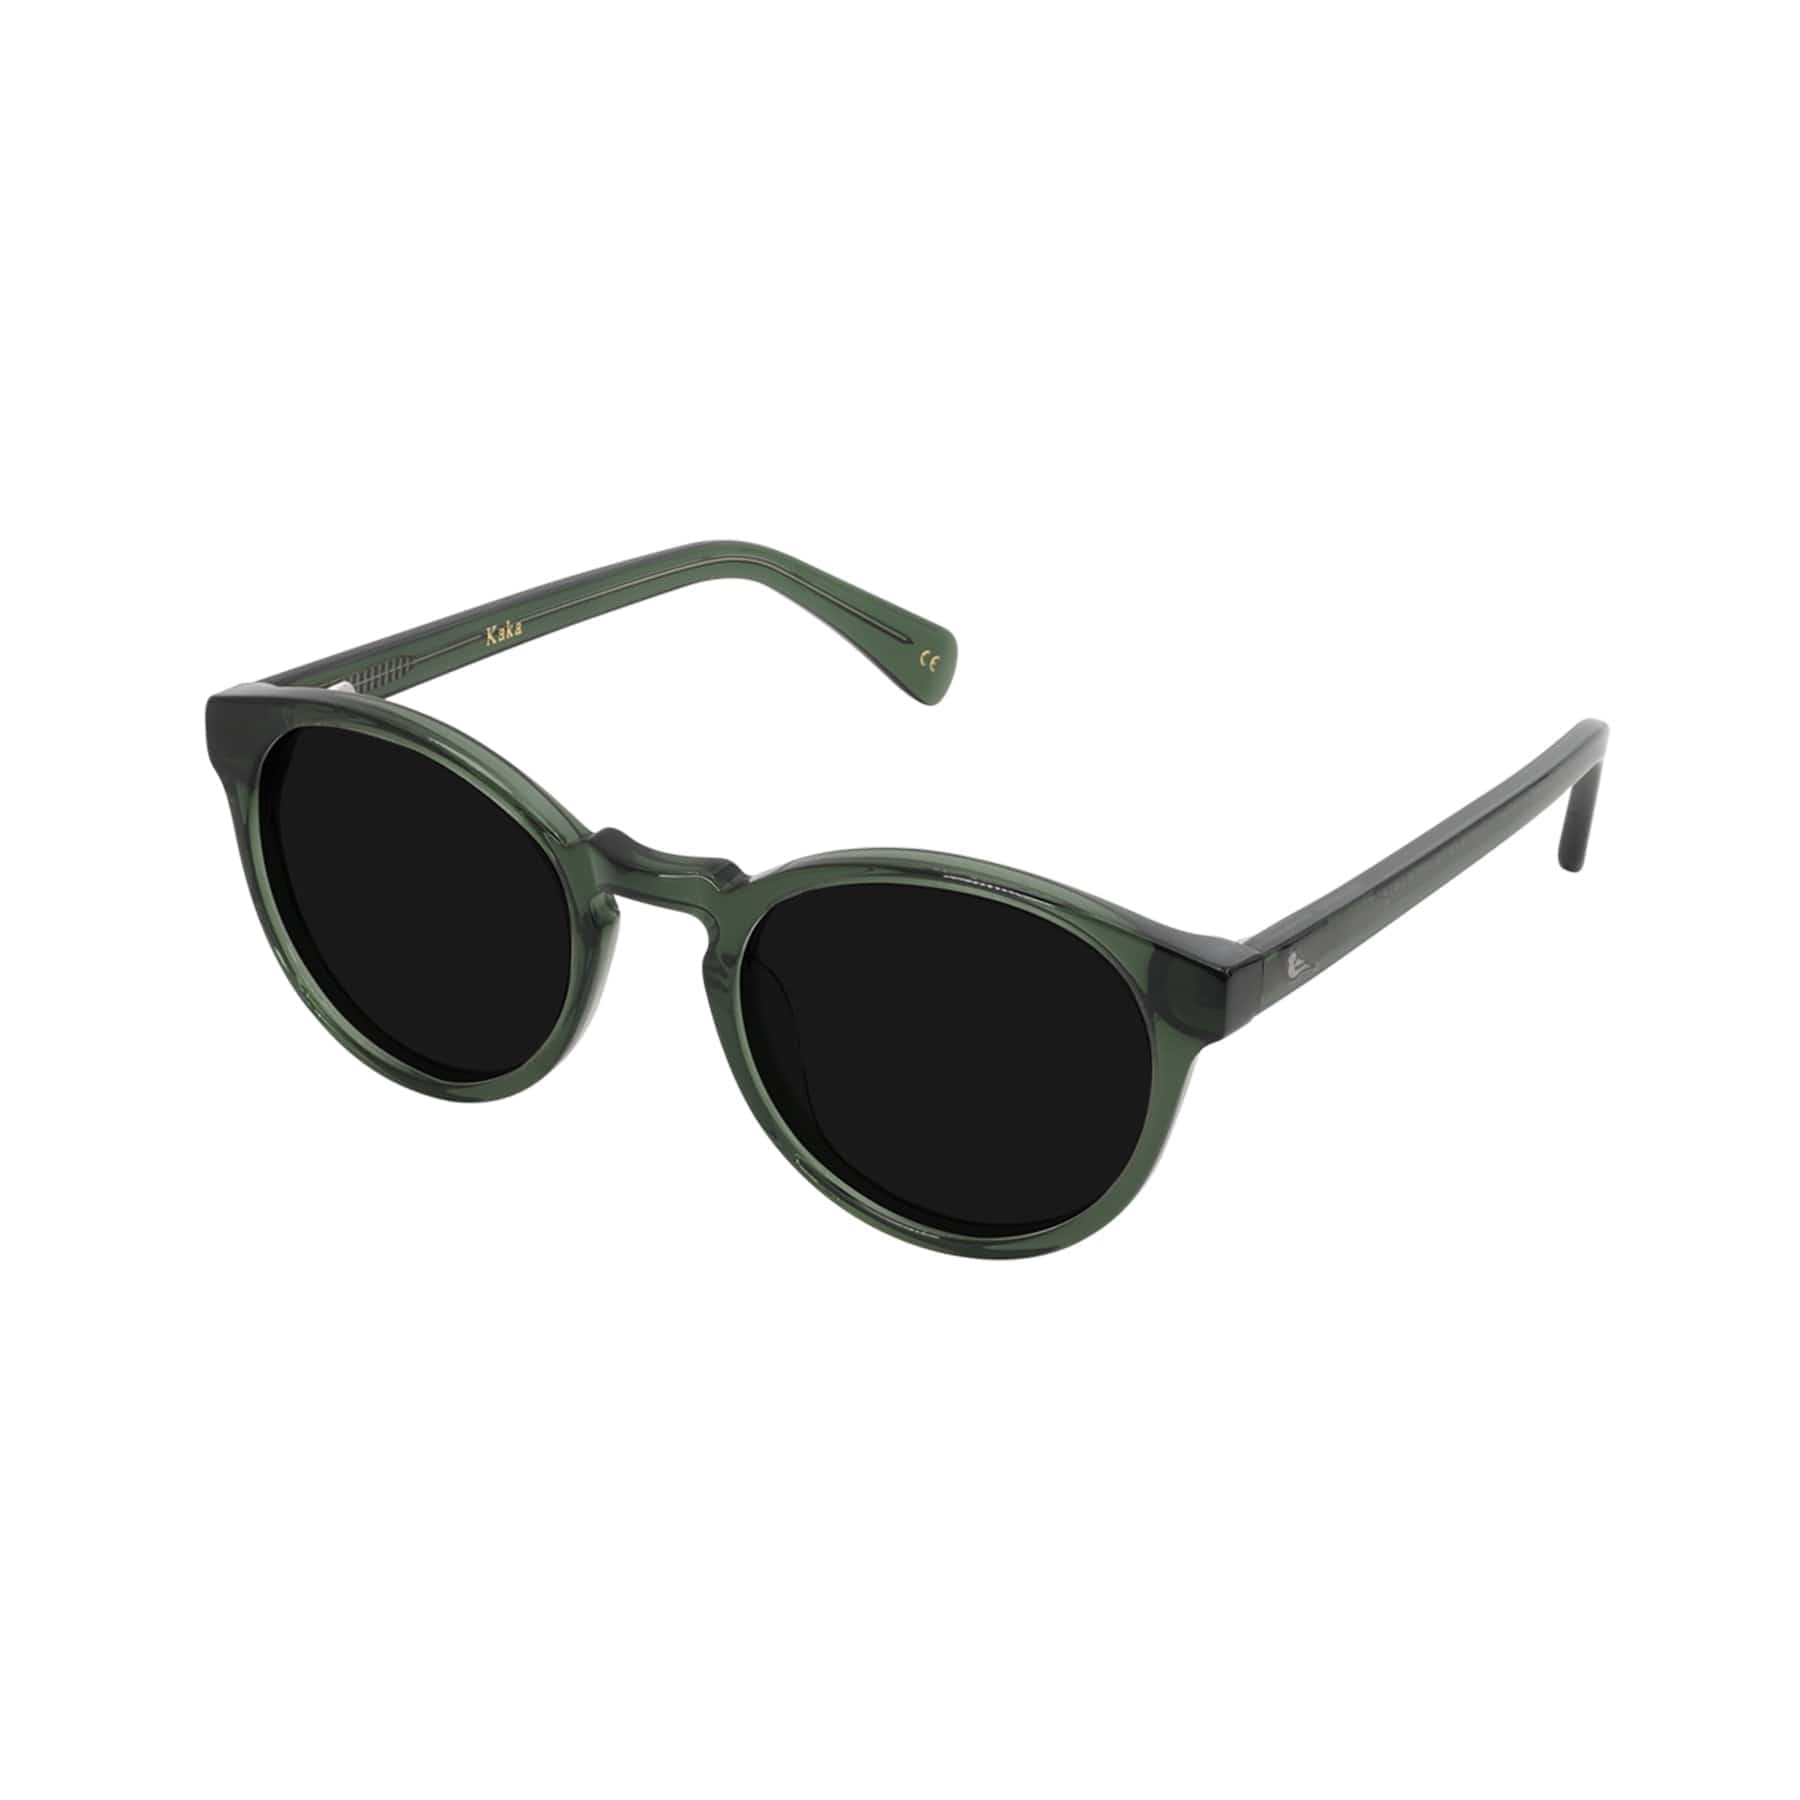 Kaka sunglasses olive